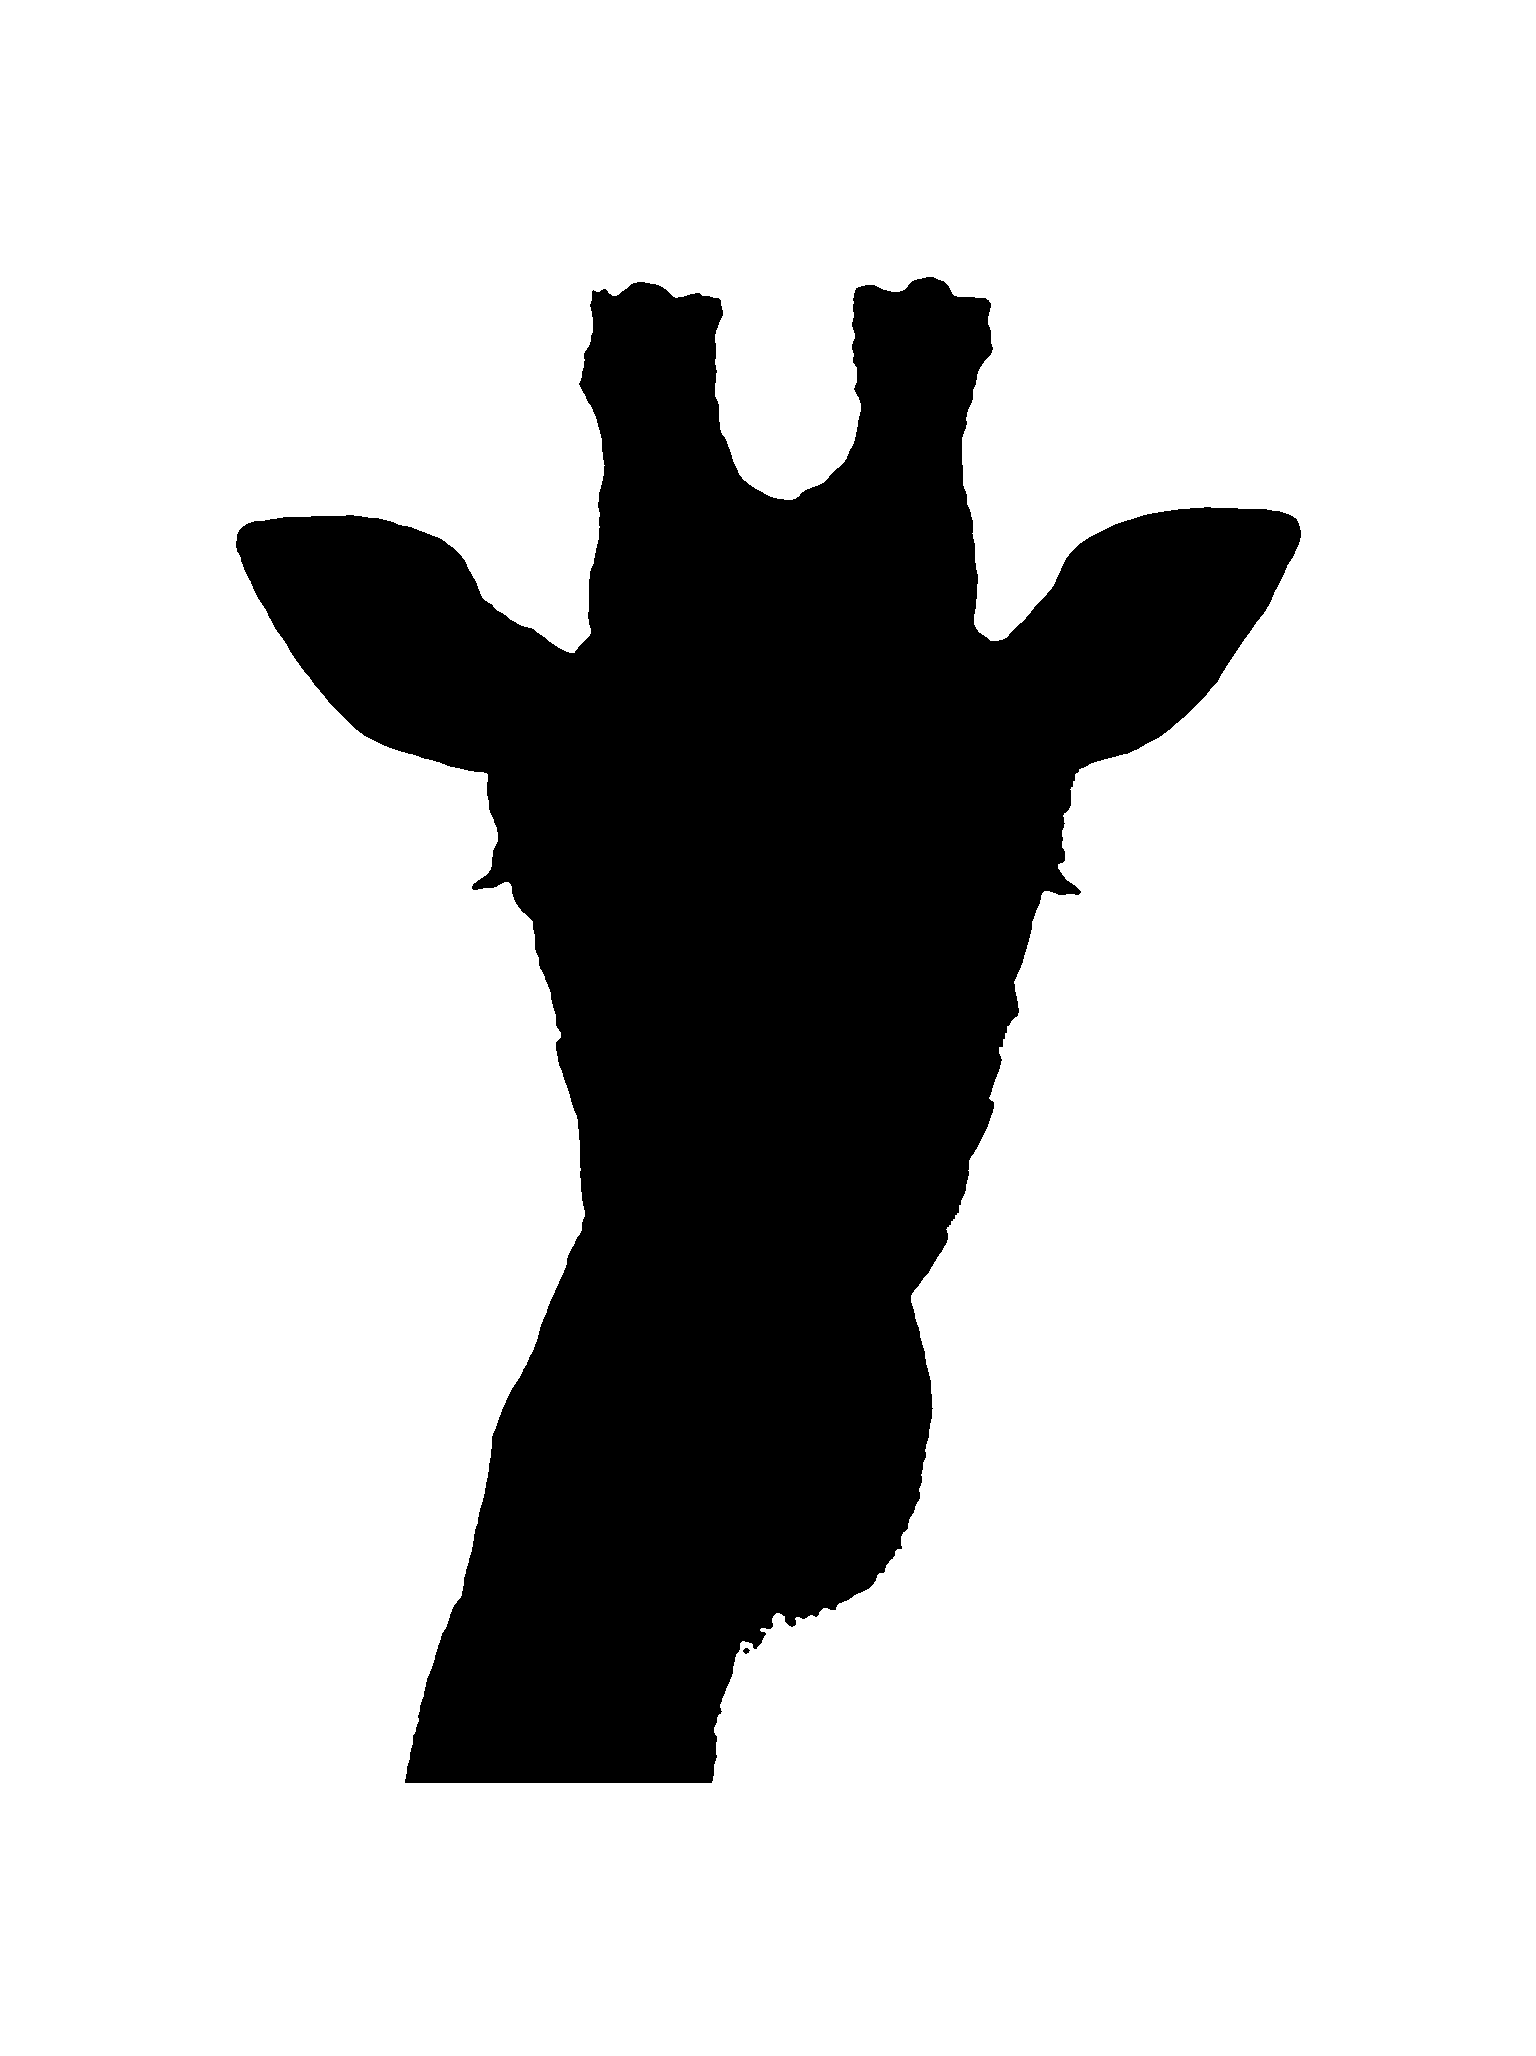 Simple seahorse silhouette.